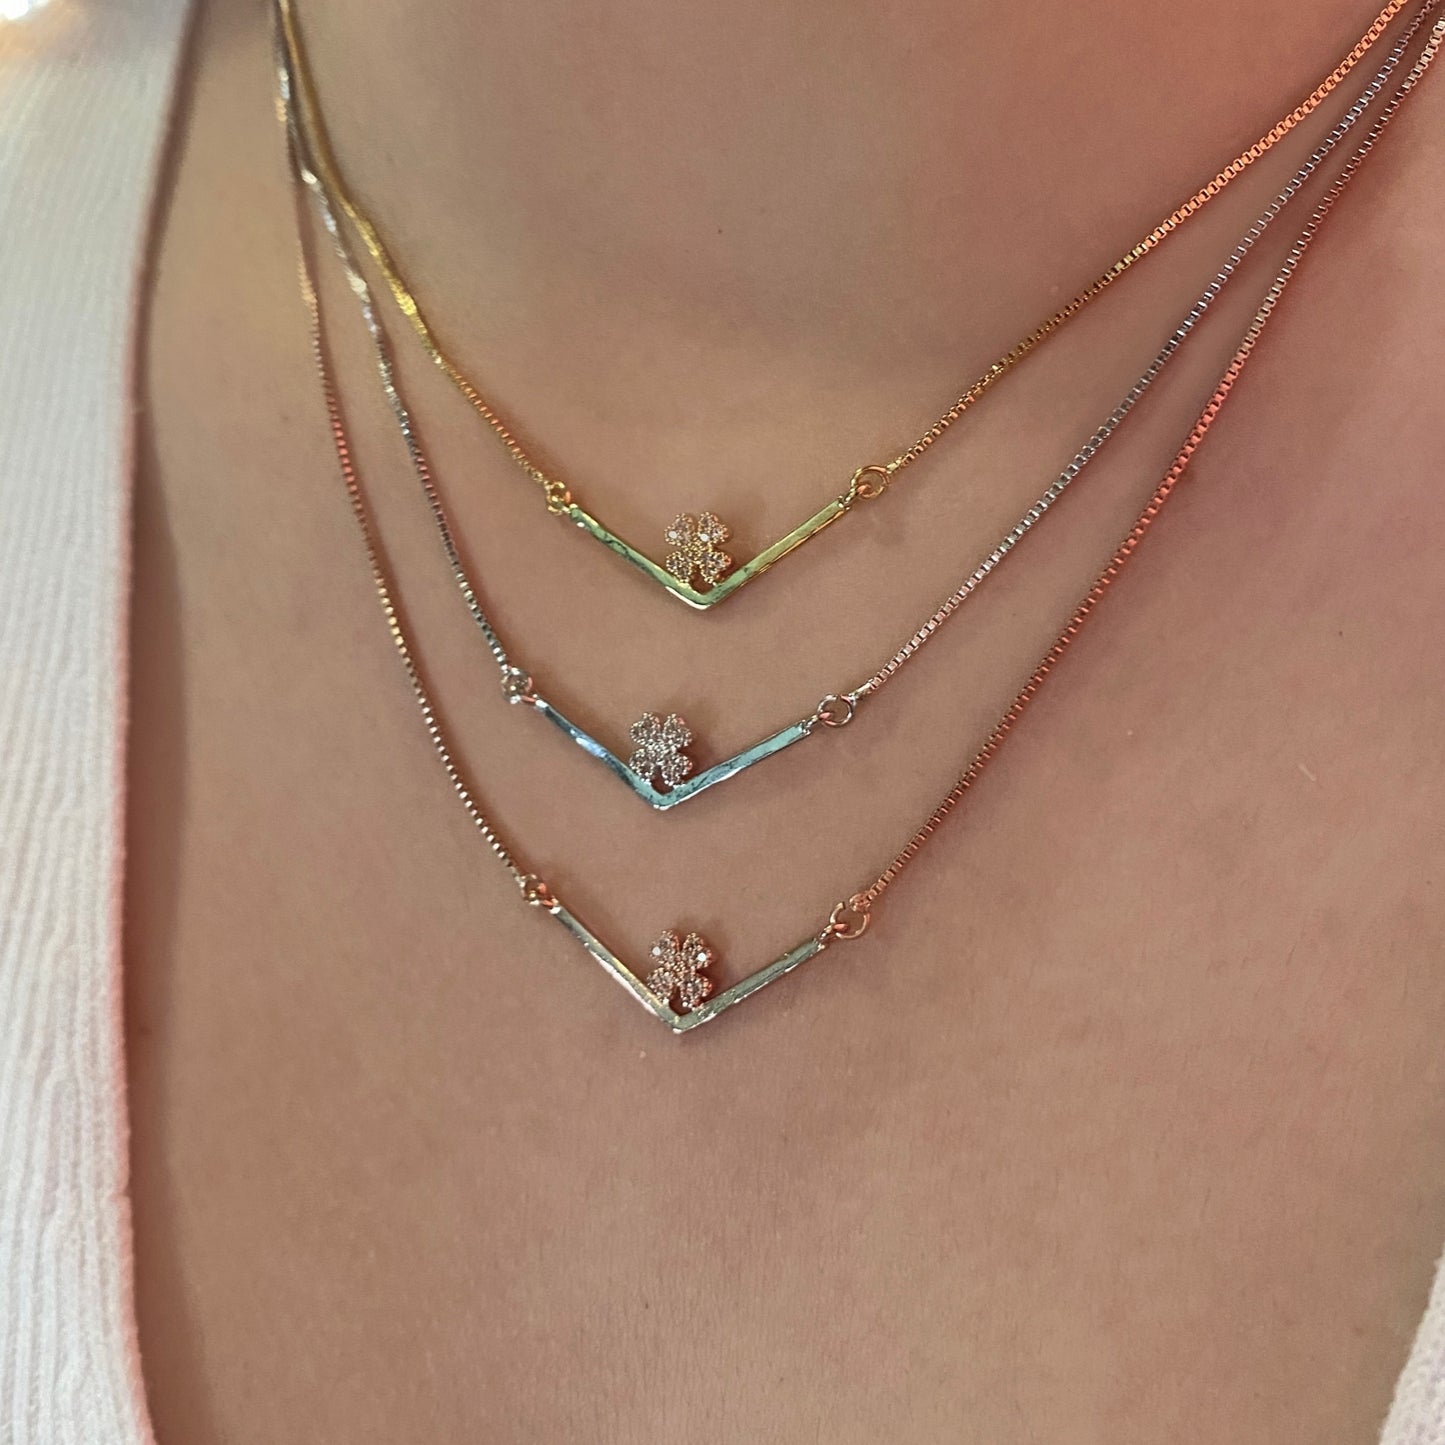 V-shaped heart necklace (897)